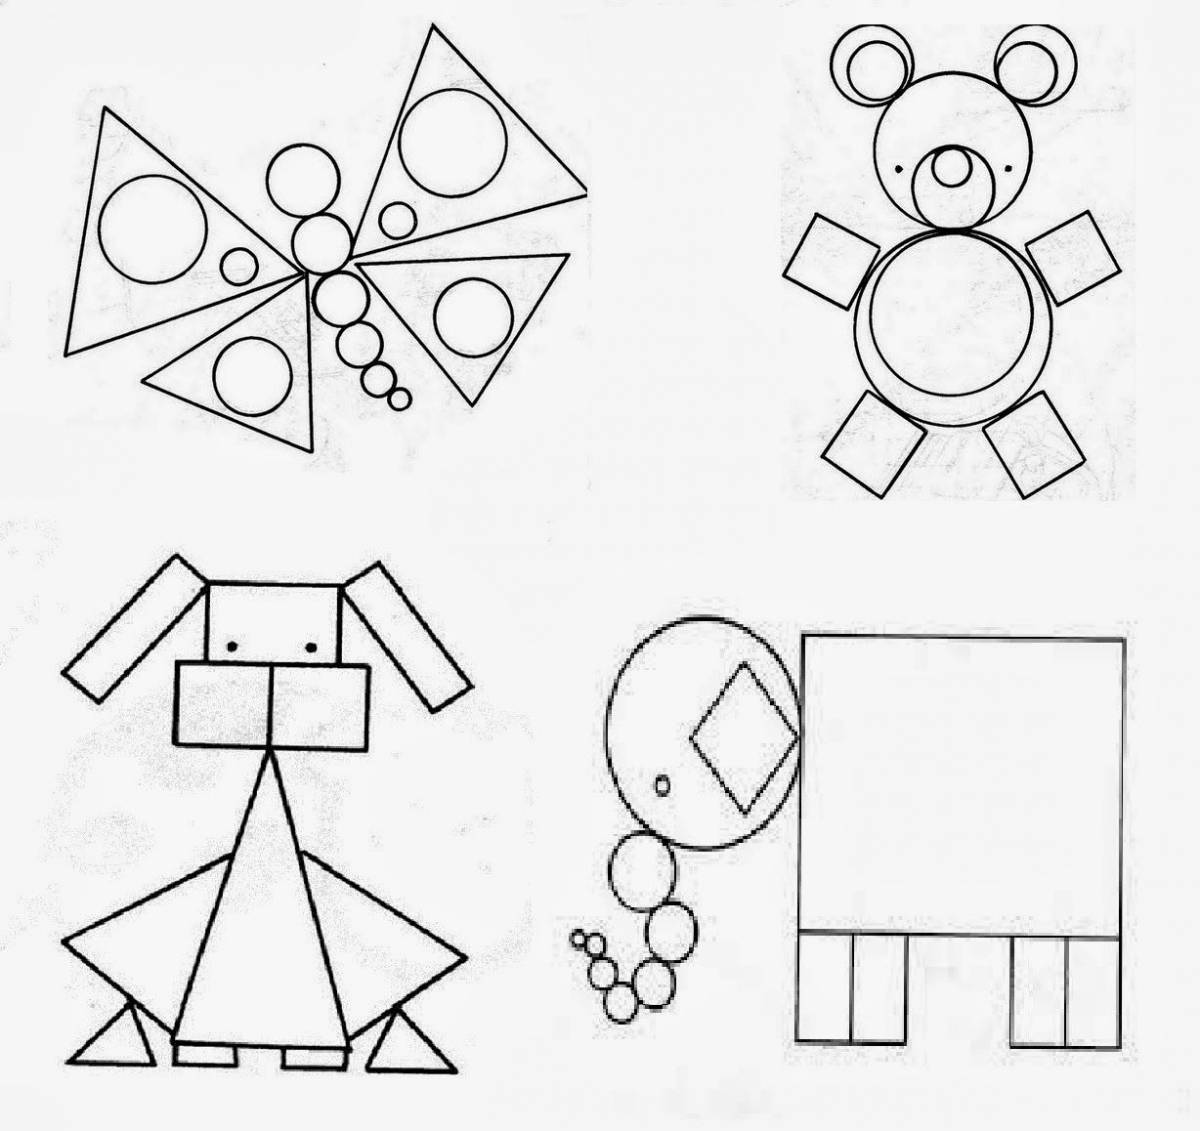 Fun coloring of geometric shapes for preschoolers